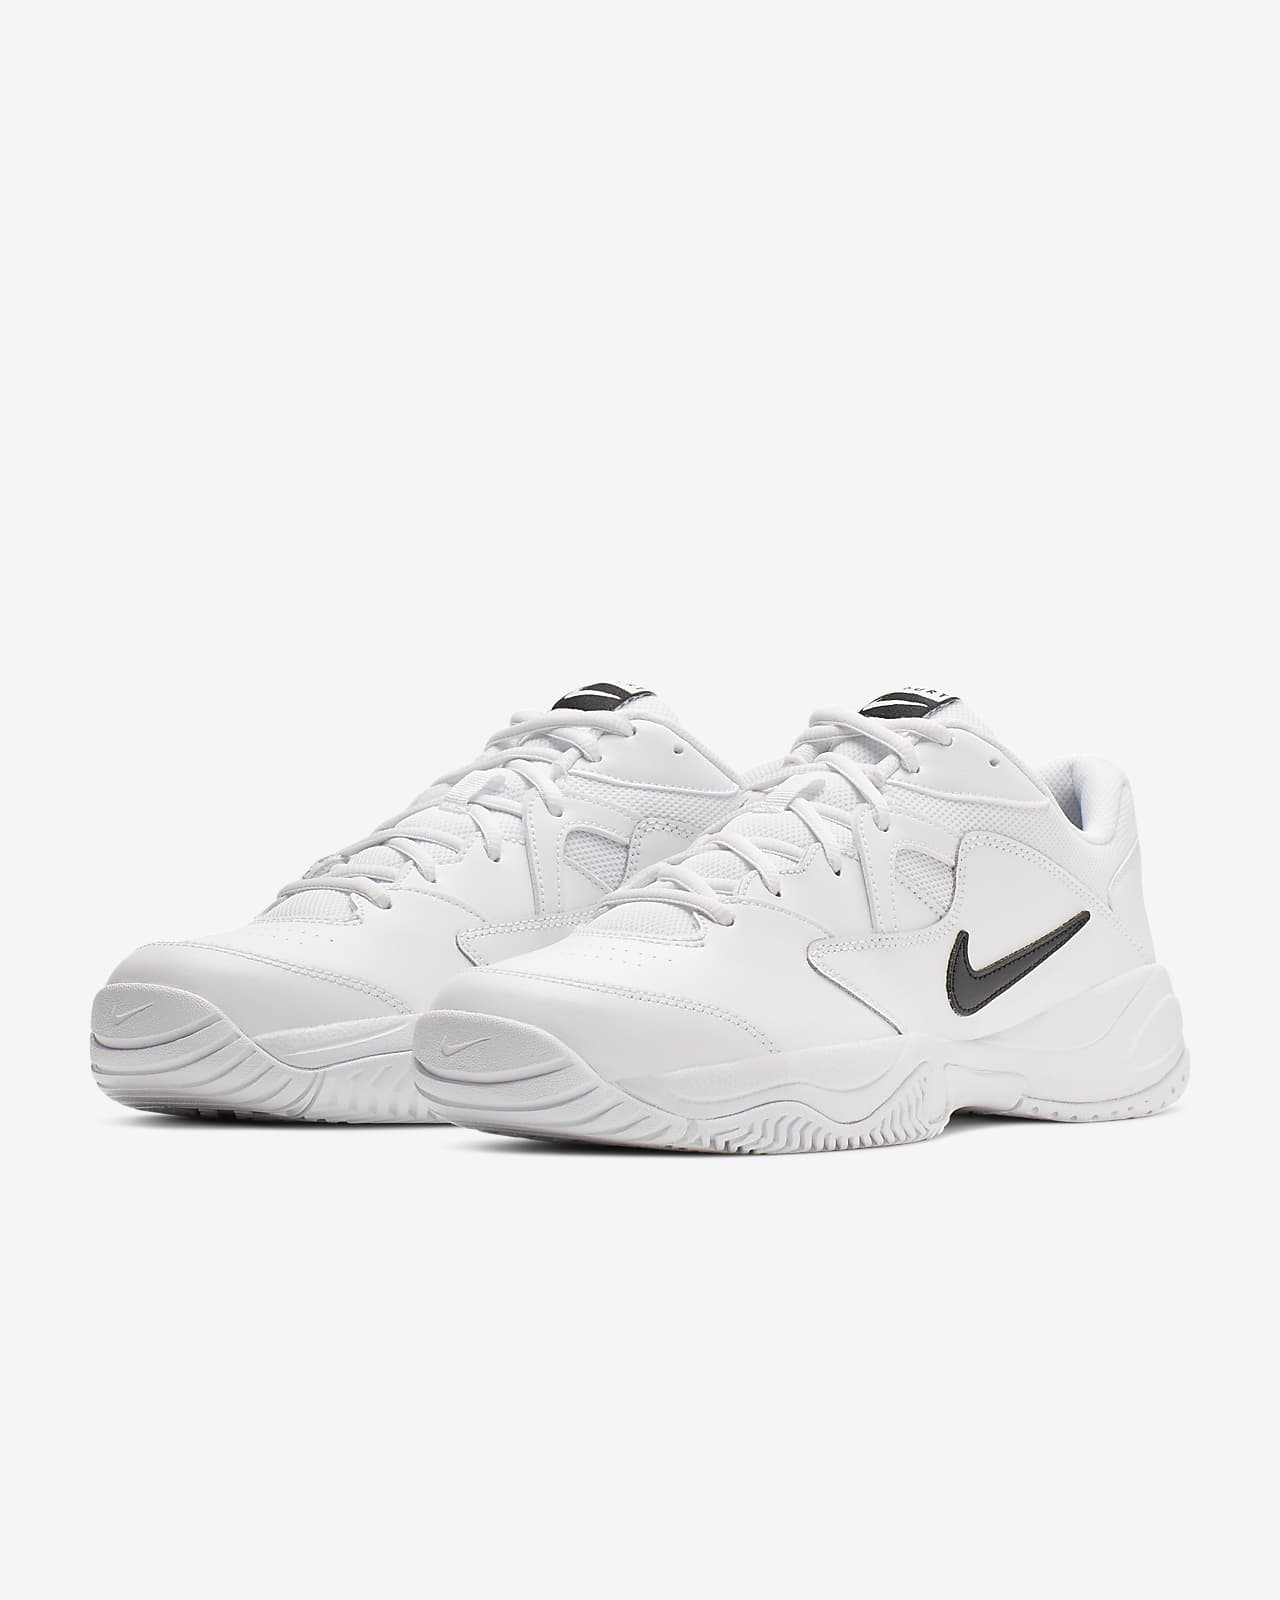 NikeCourt Hard Court Tennis Shoes. Nike